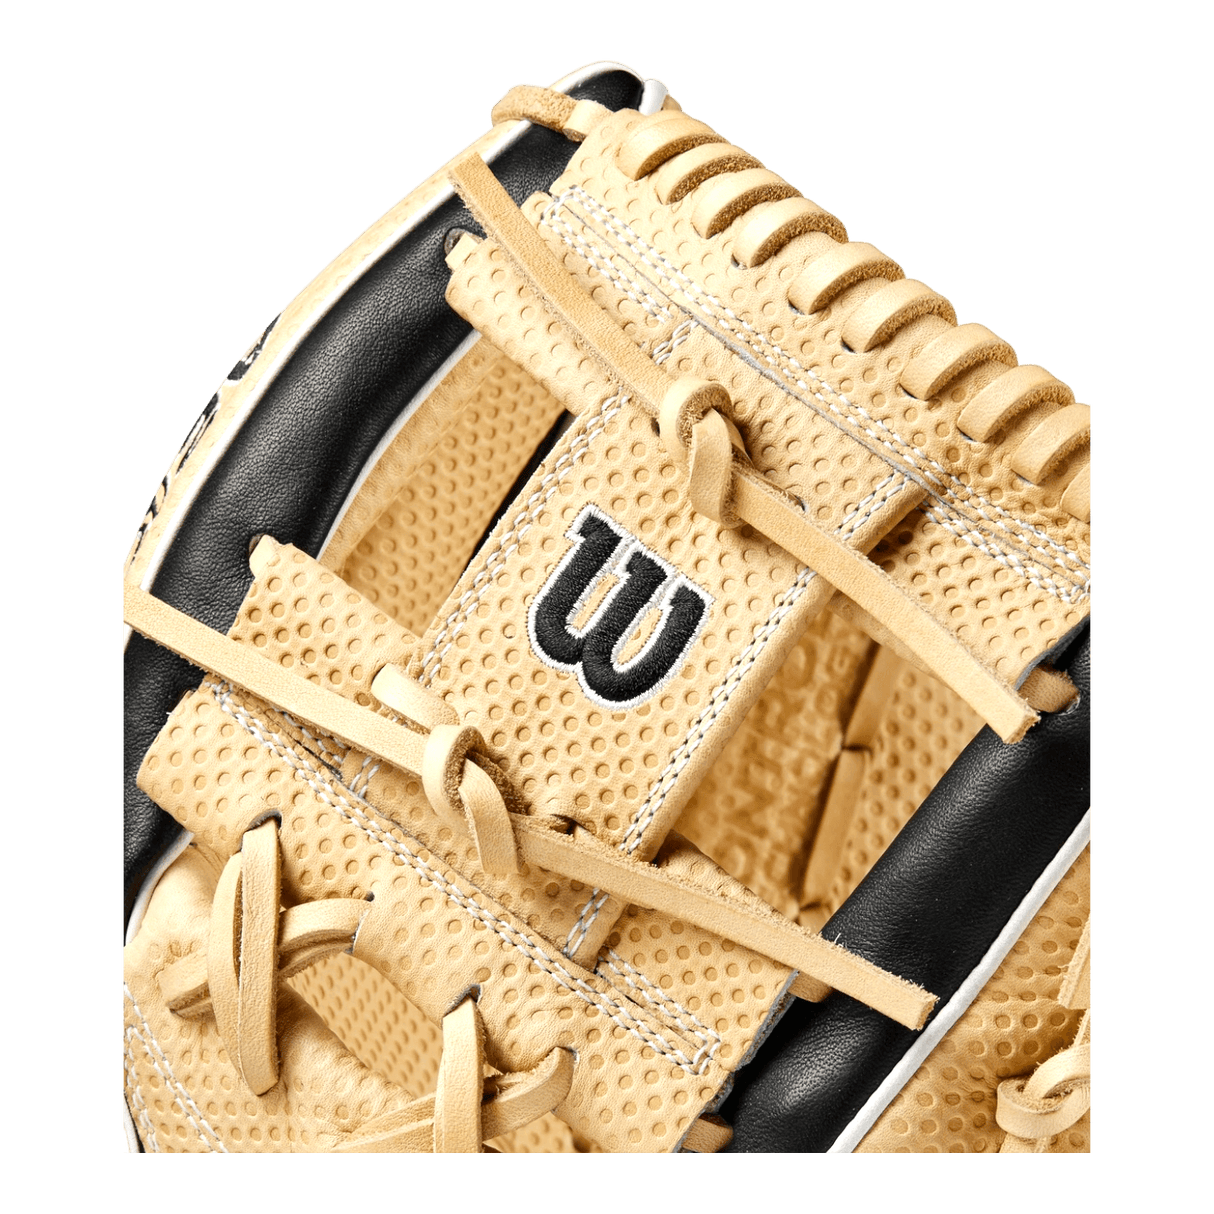 Wilson A2K 11.75” WBW1013751175 I-Web Black Blonde Infield Glove - CustomBallgloves.com